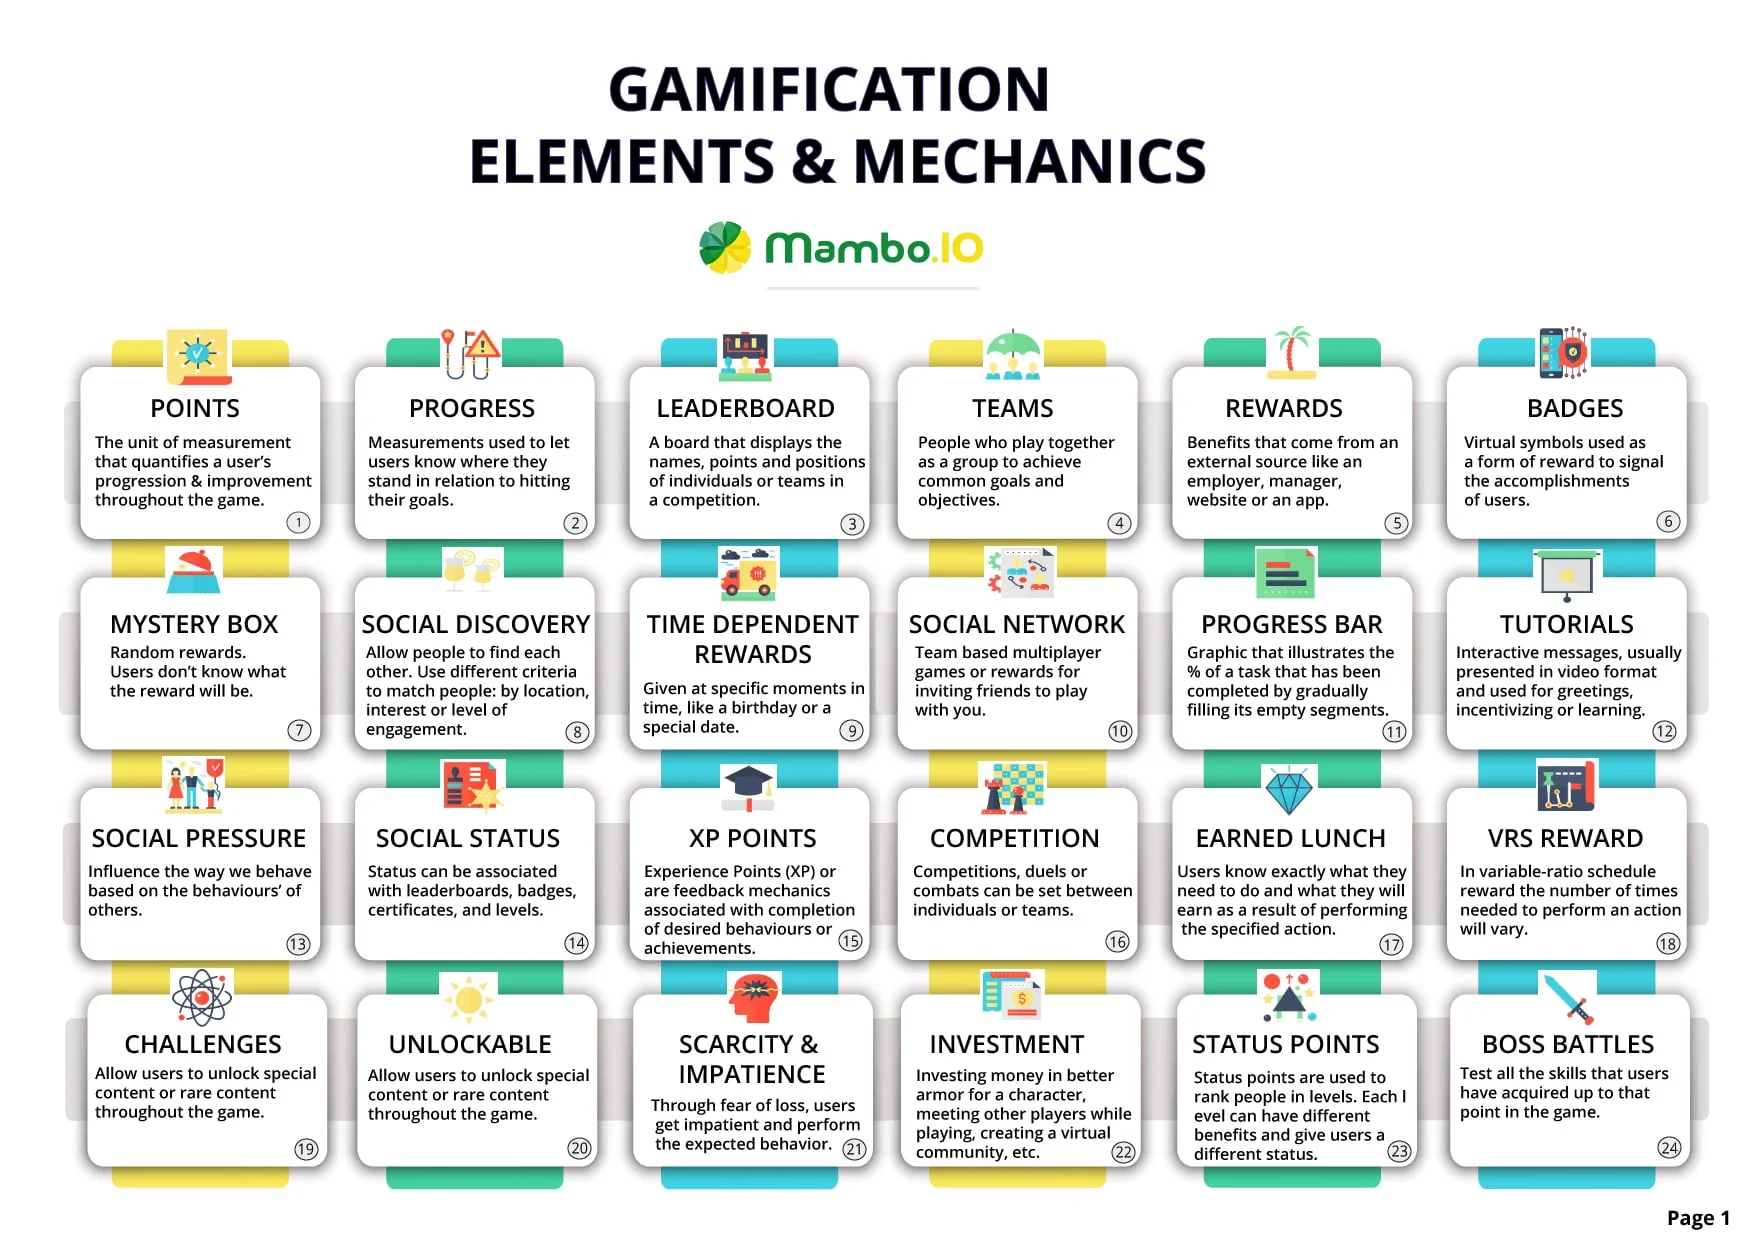 Gamification elements and mechanics